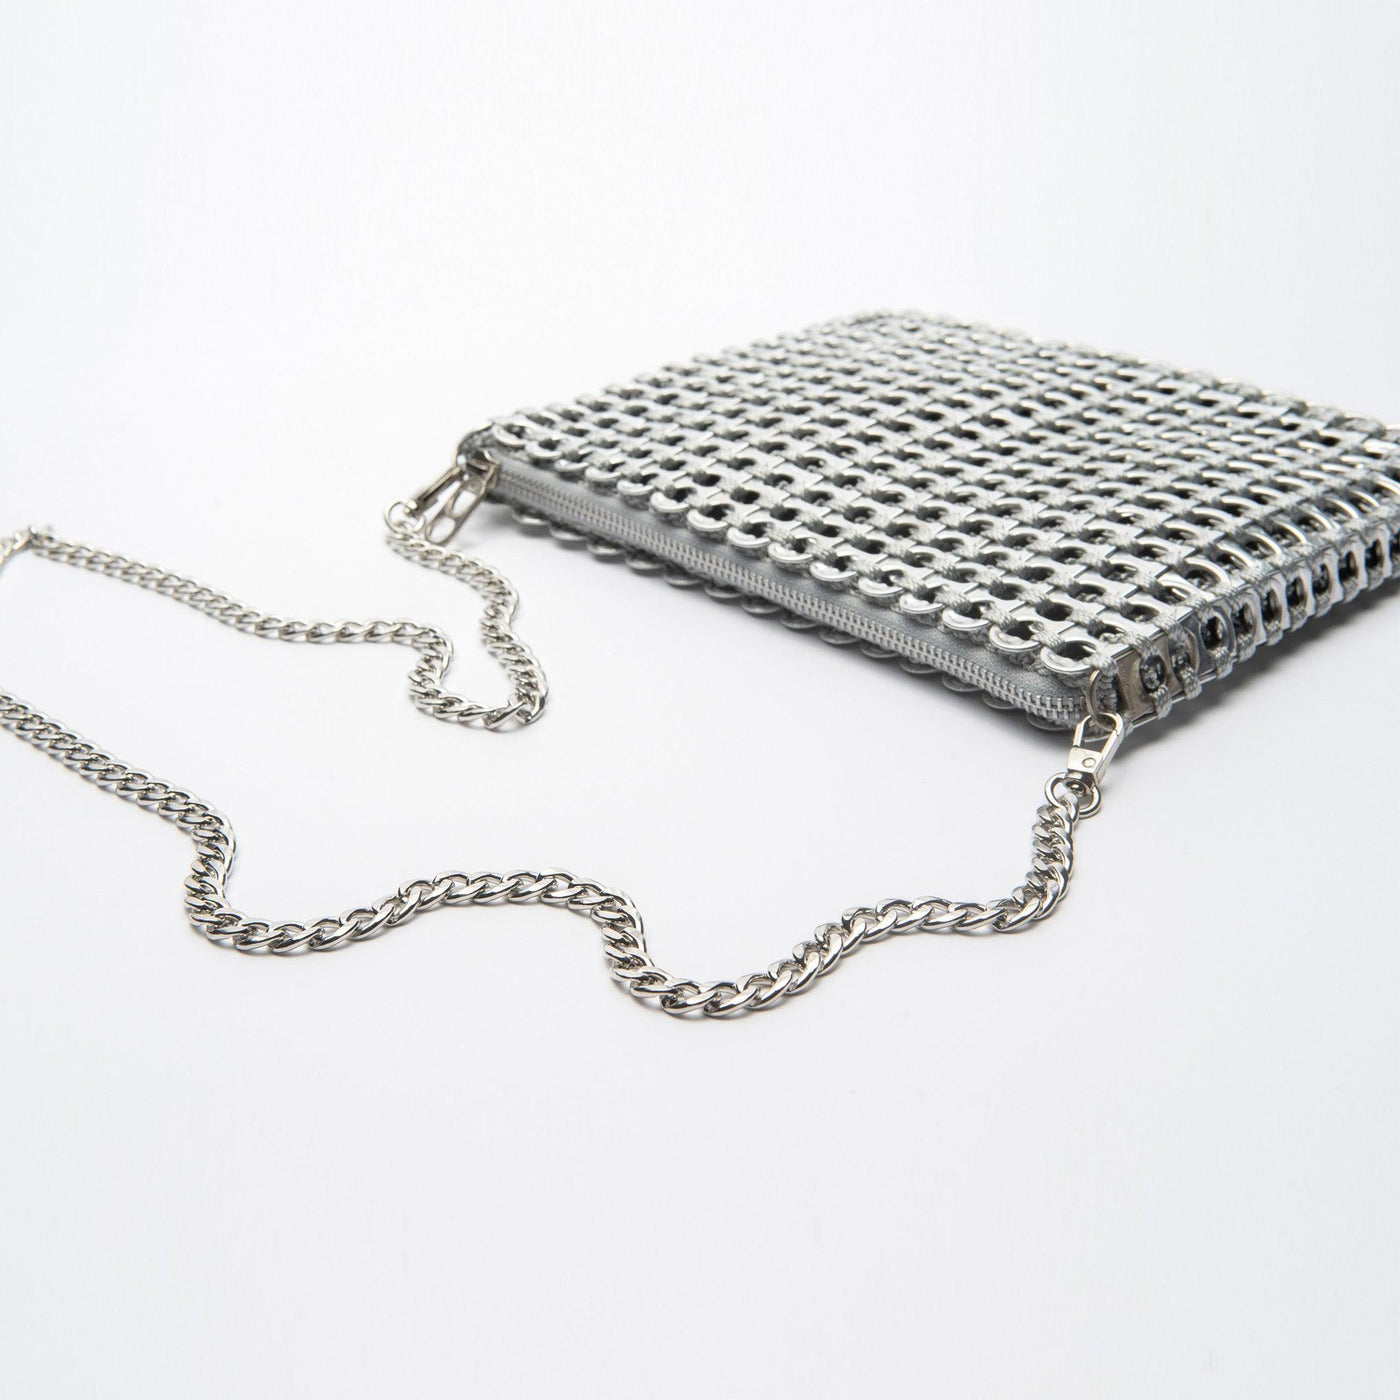 alt="upcycled crossbody bag with chain strap - escama studio"